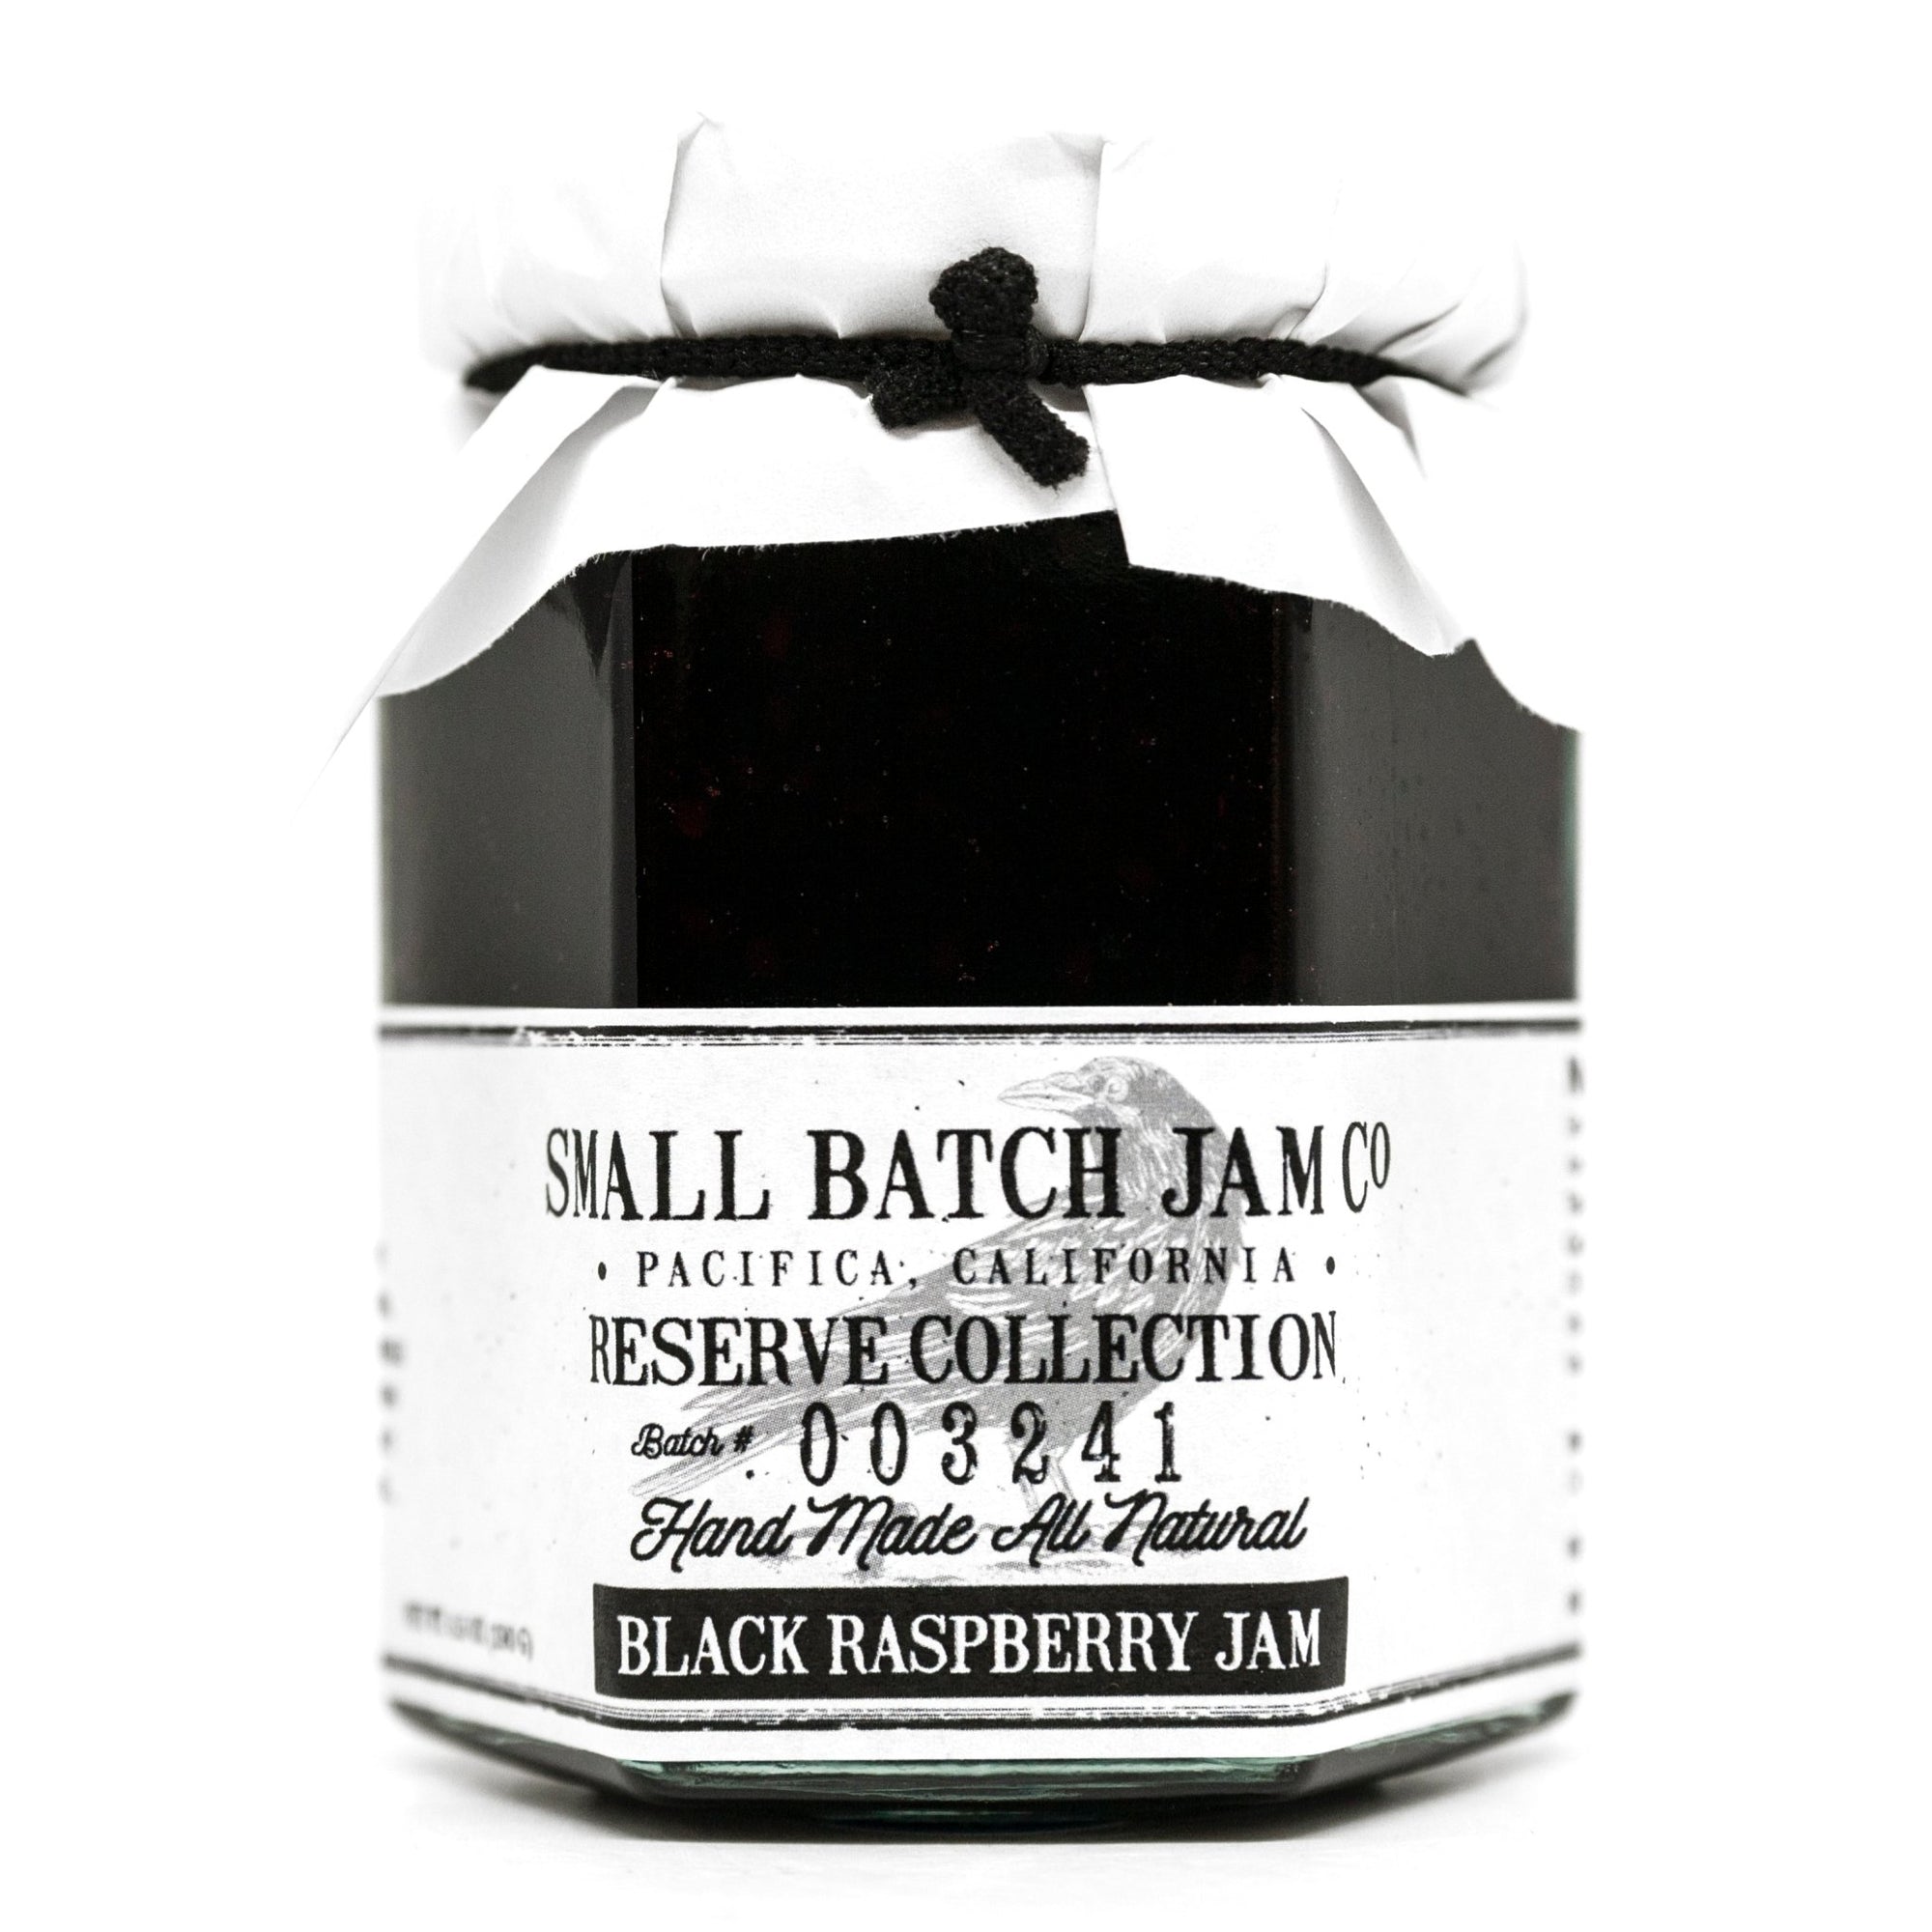 Black Raspberry Jam - Reserve Collection - Small Batch Jam Co